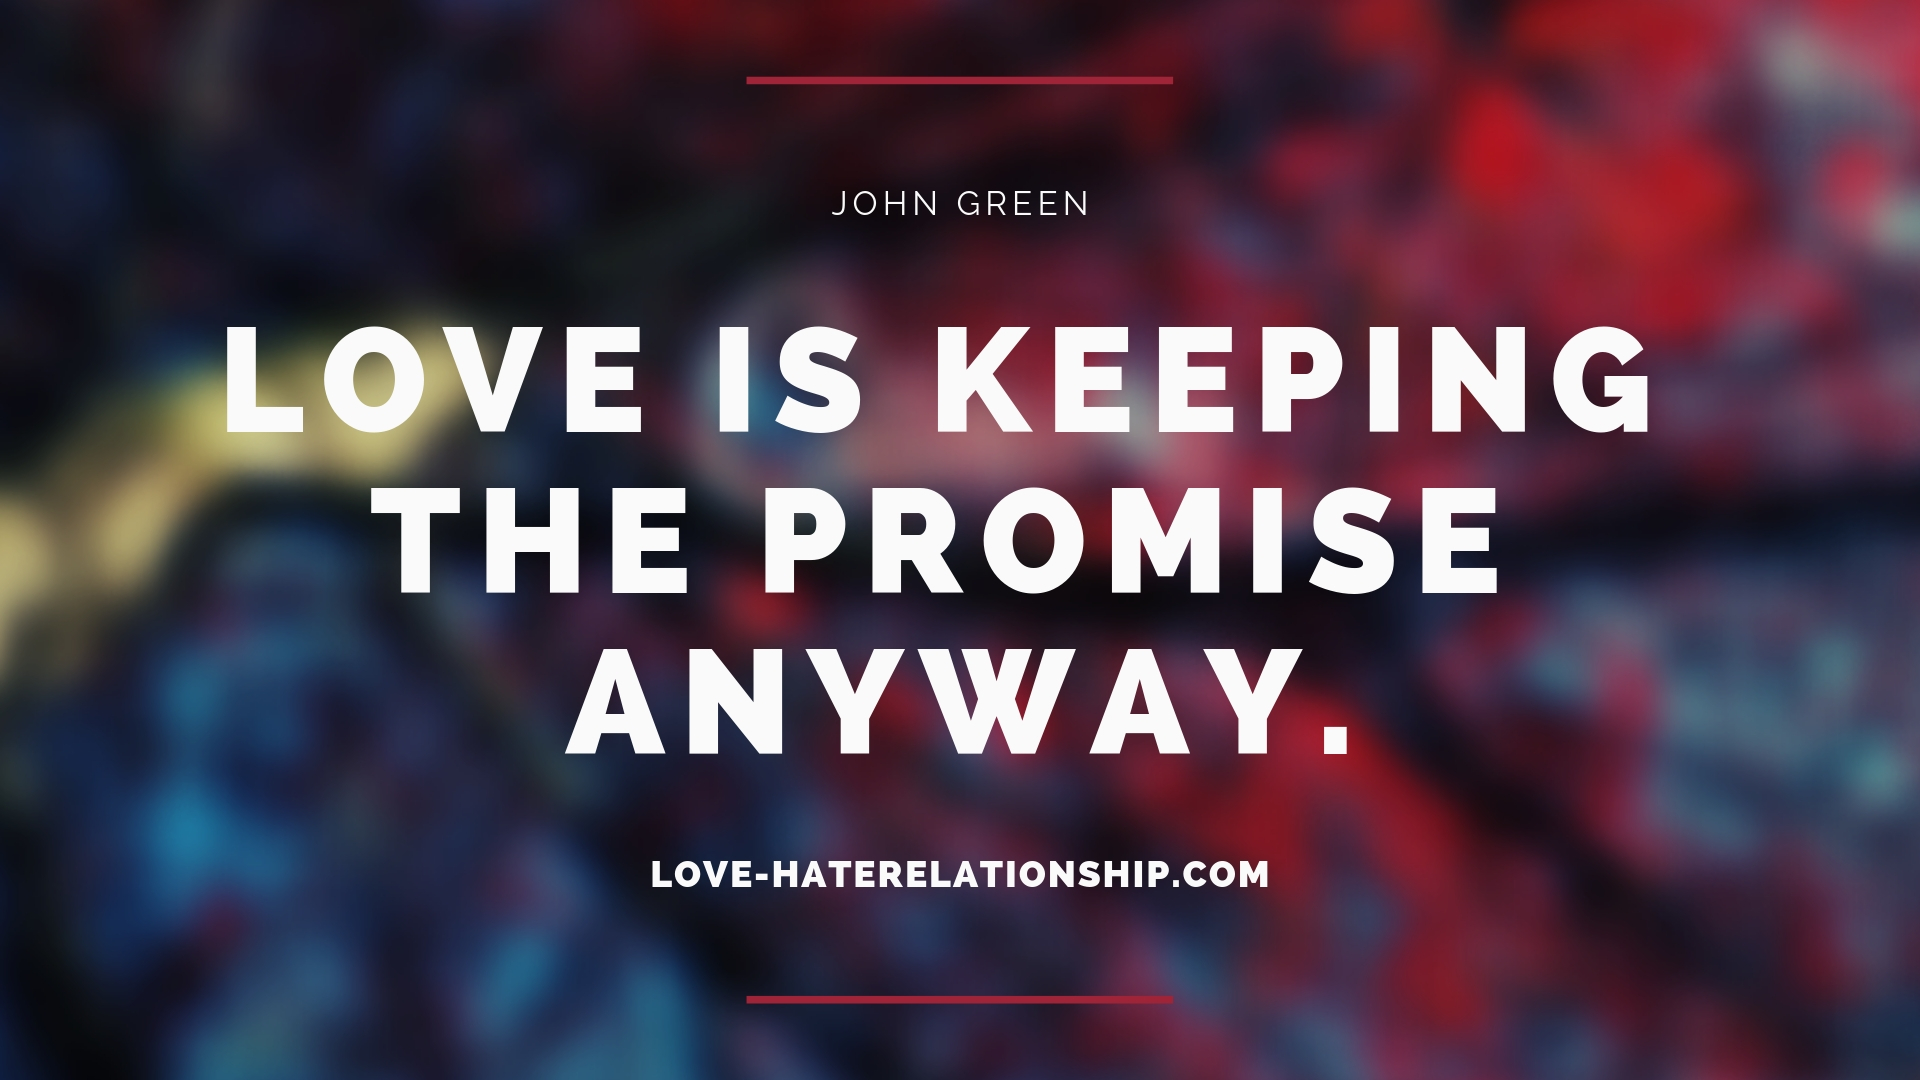 John Green quotes